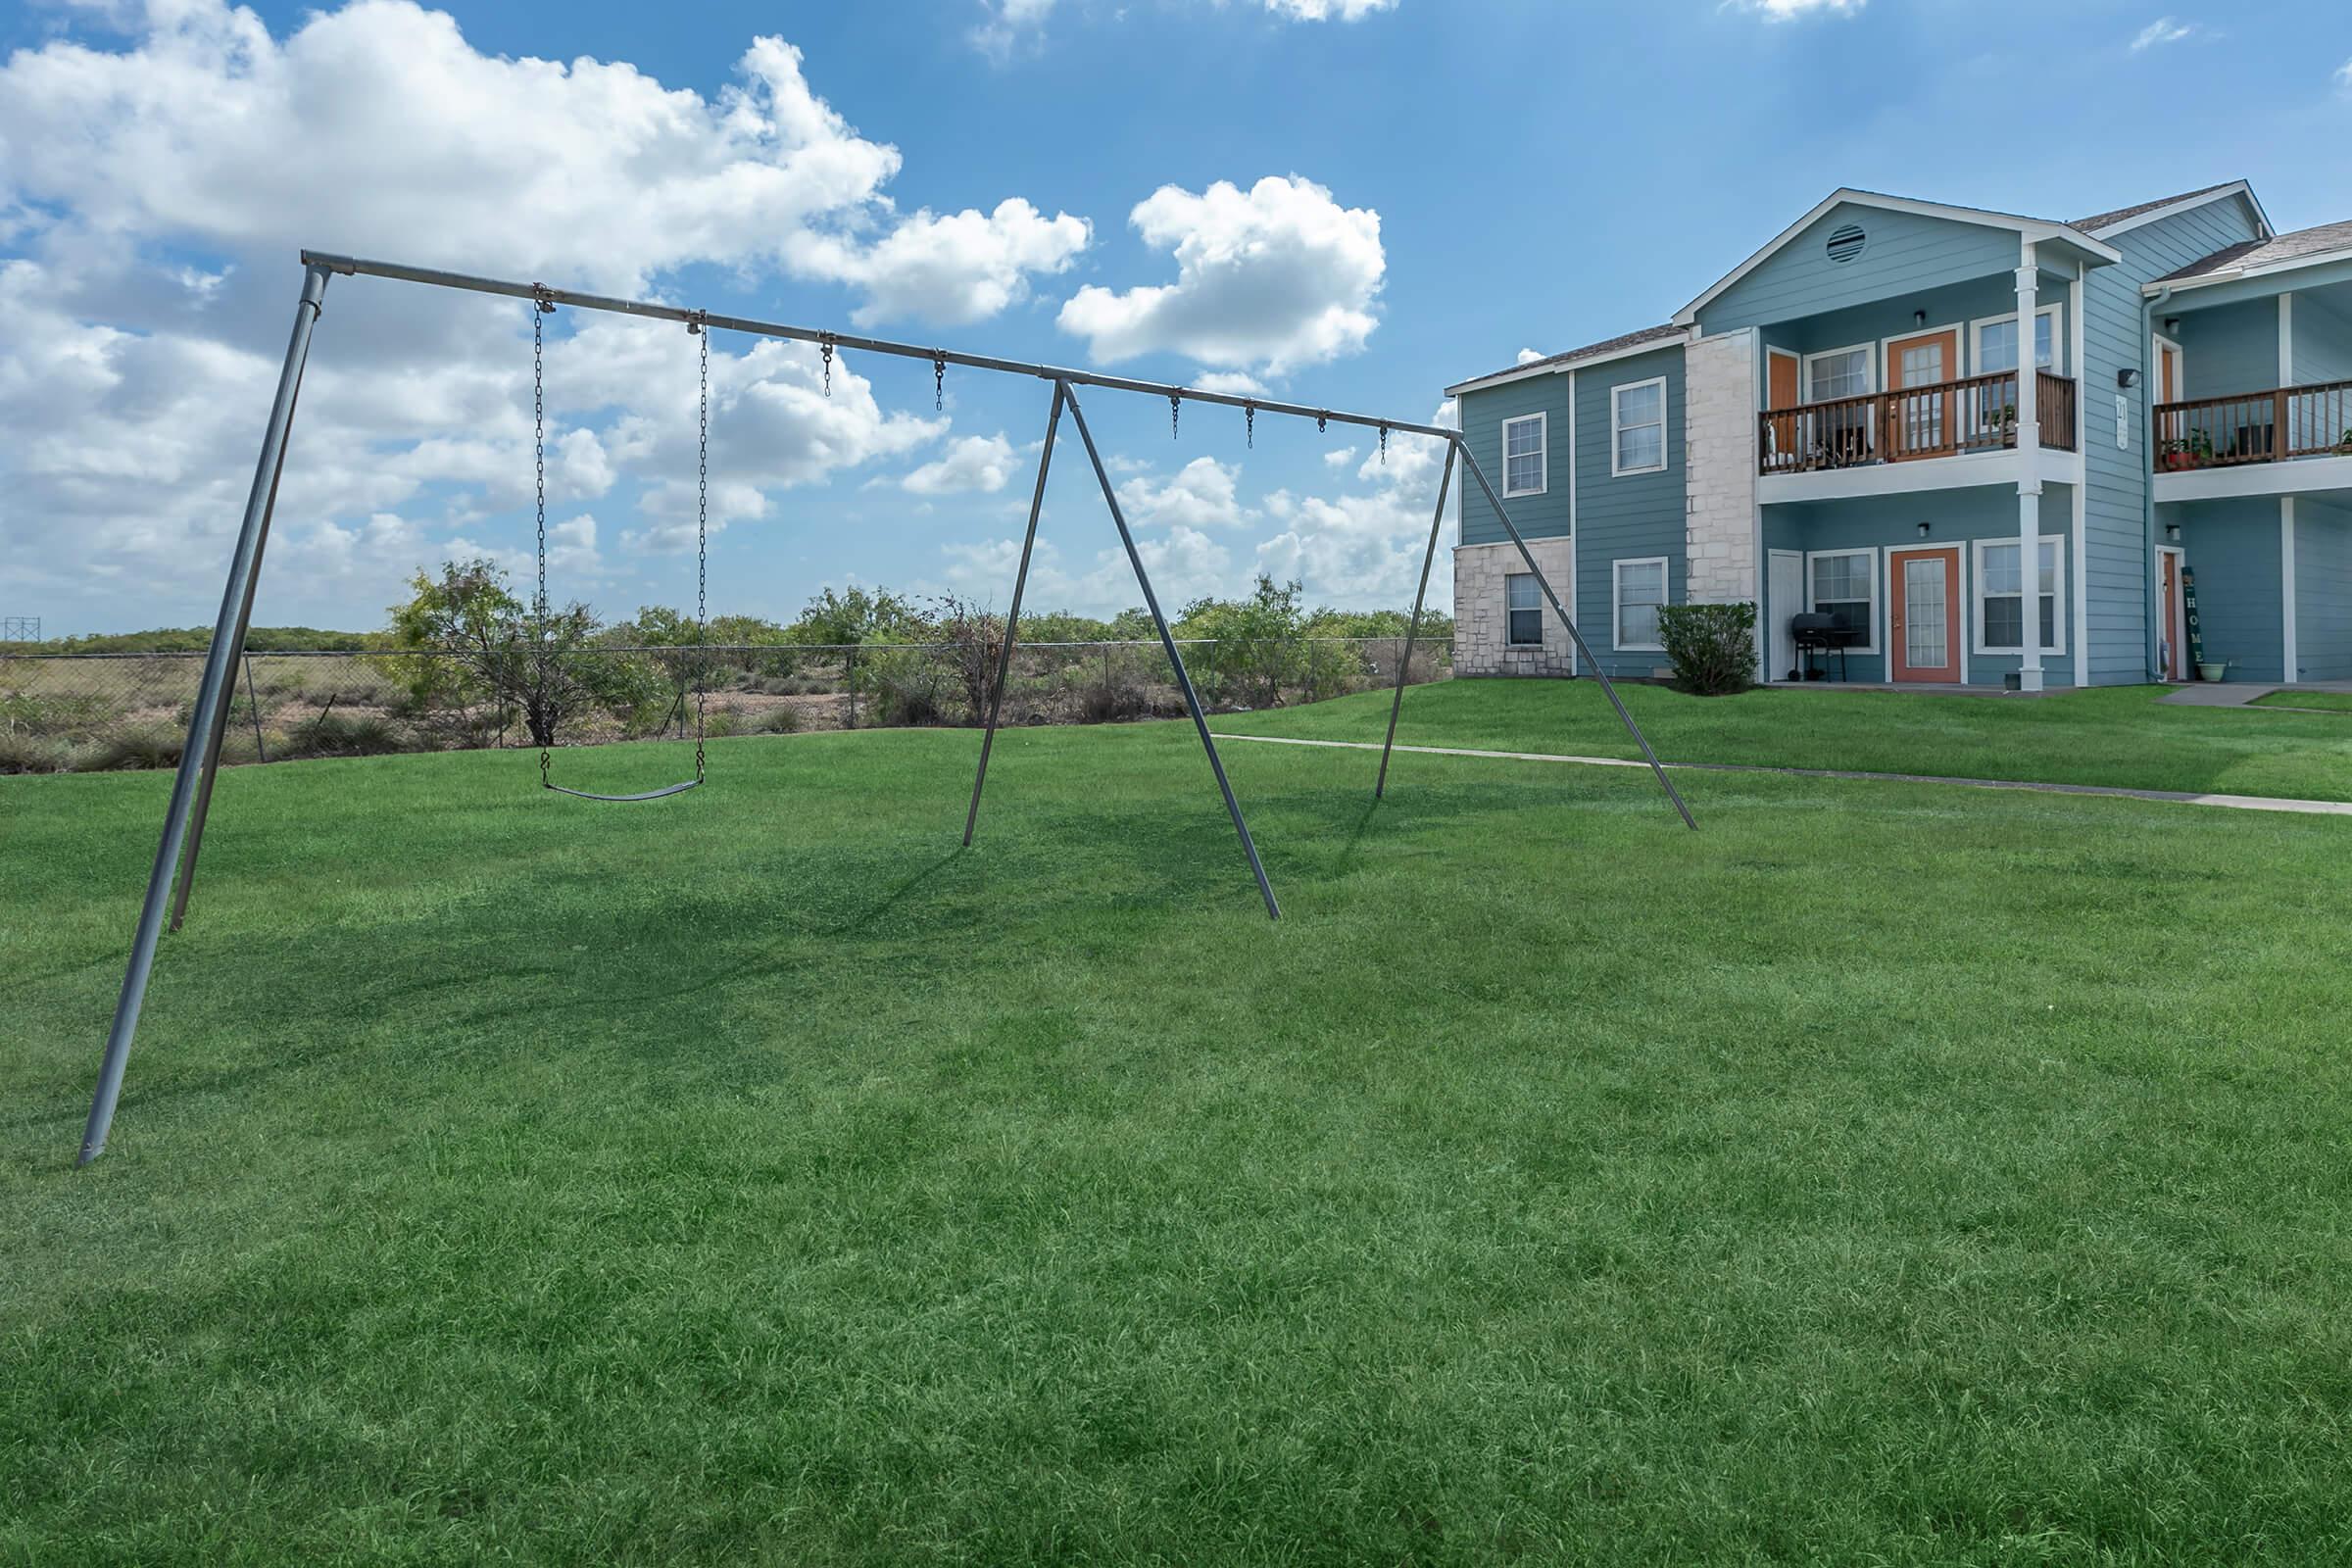 Greenspace, swing set and 2 story building Portside Villas Apts Ingleside, TX  78362